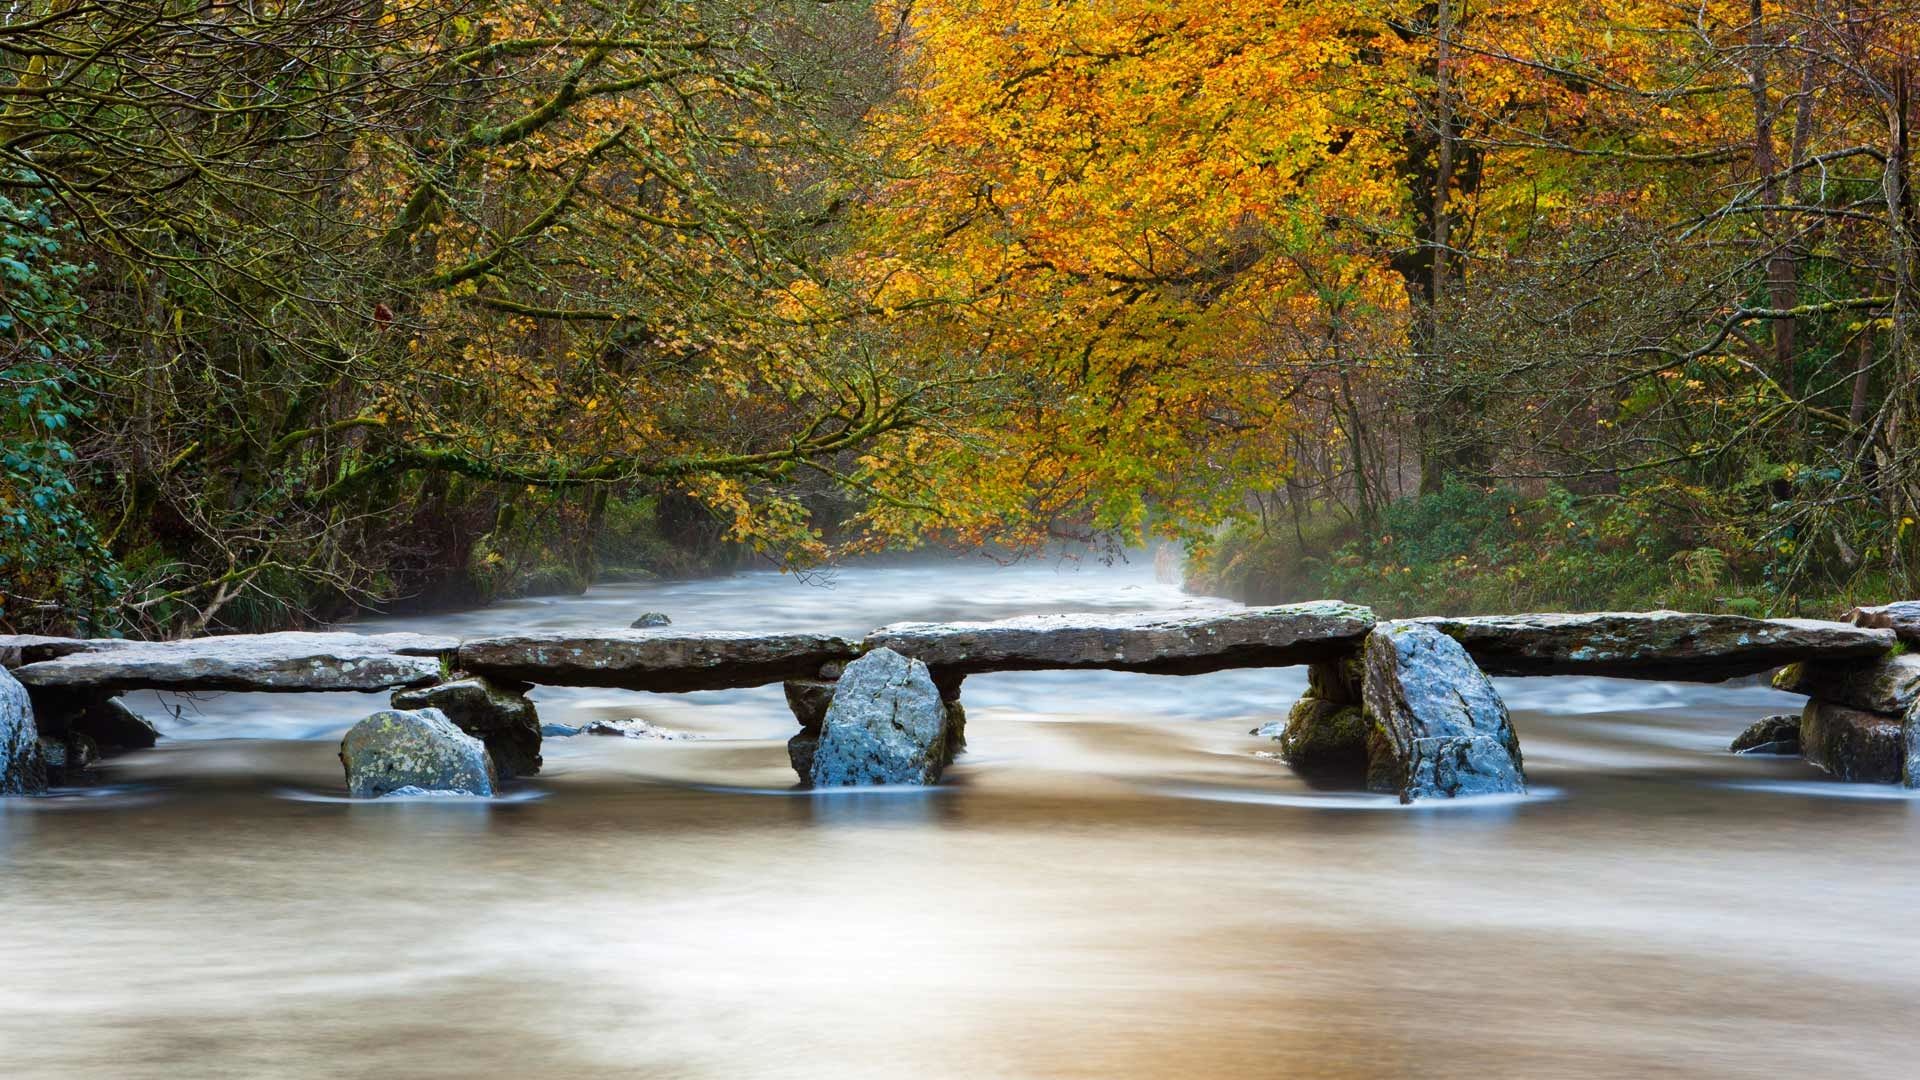 Wallpaper River, trees, stone bridge, autumn 1920x1080 Full HD 2K Picture, Image